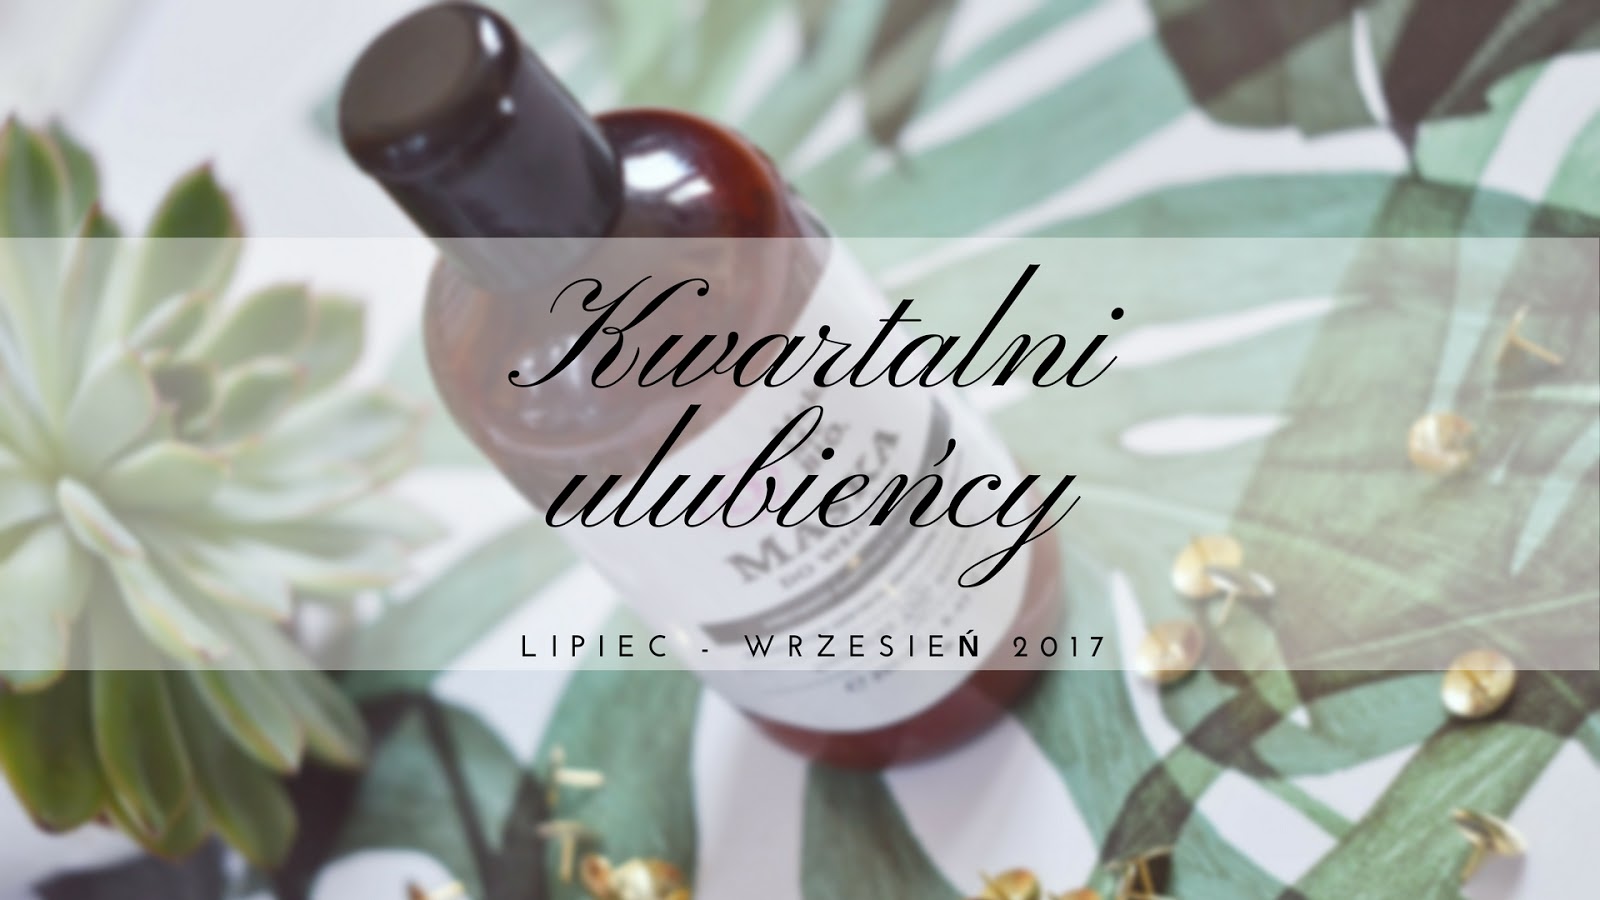 Kwartalni ulubieÅcy  - Like a porcelain doll